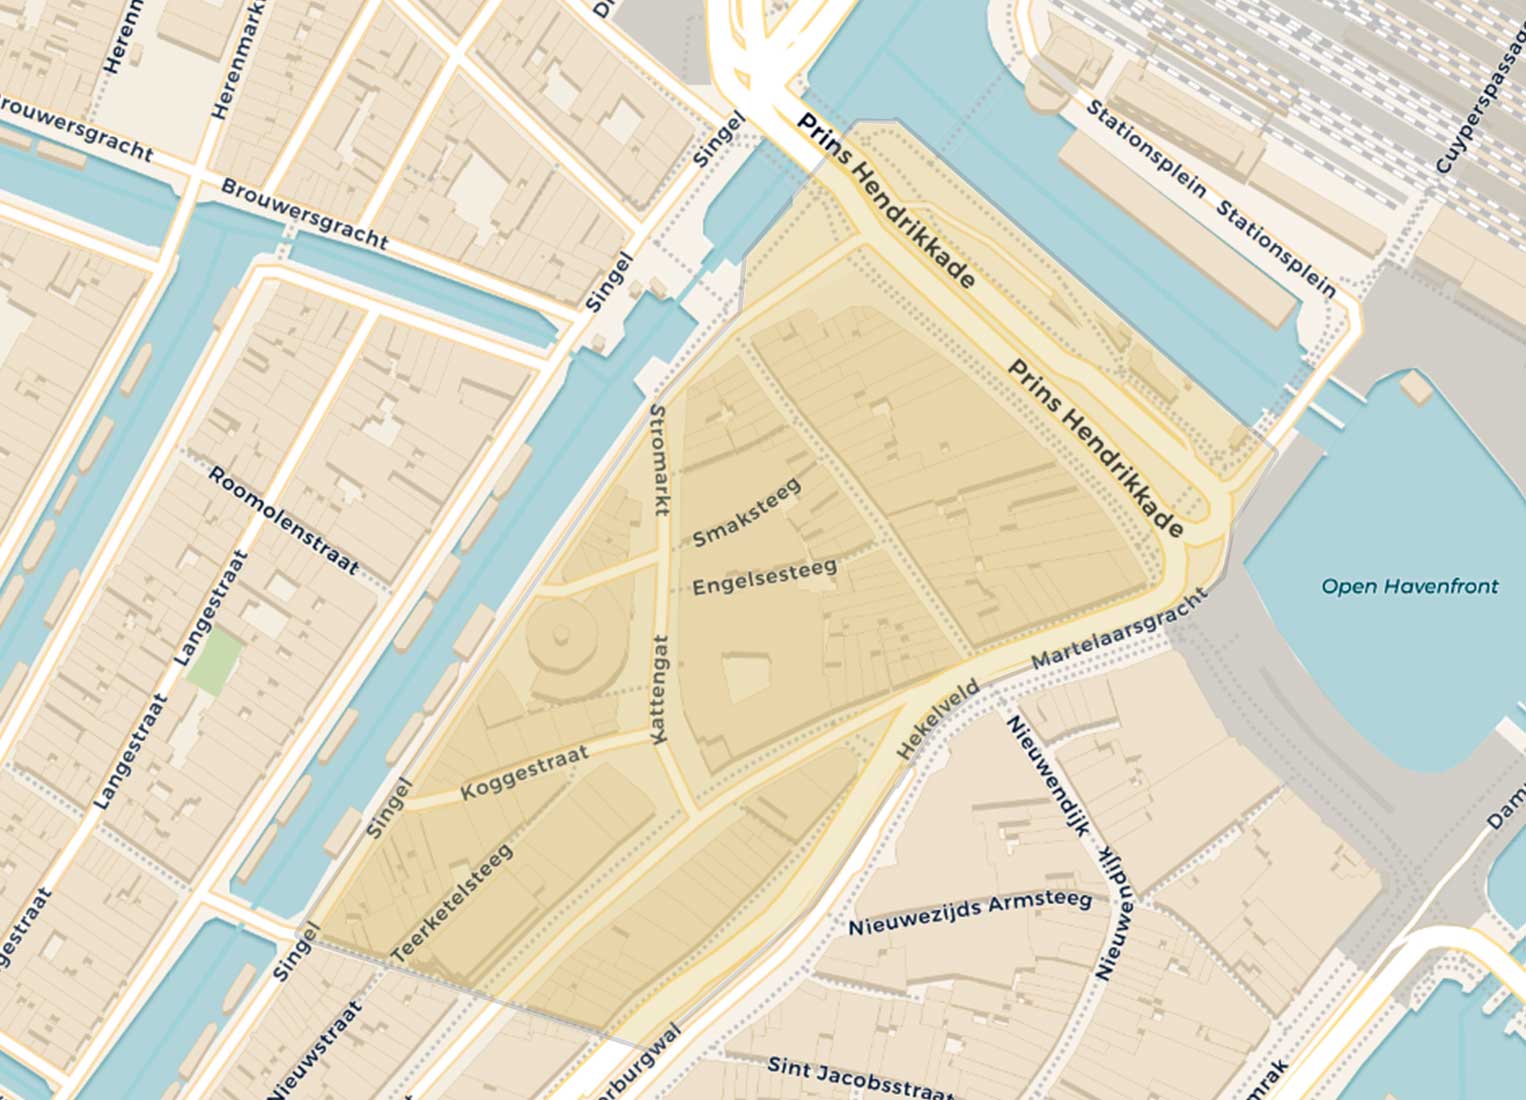 The Hemelrijk neighborhood in Amsterdam on today's map